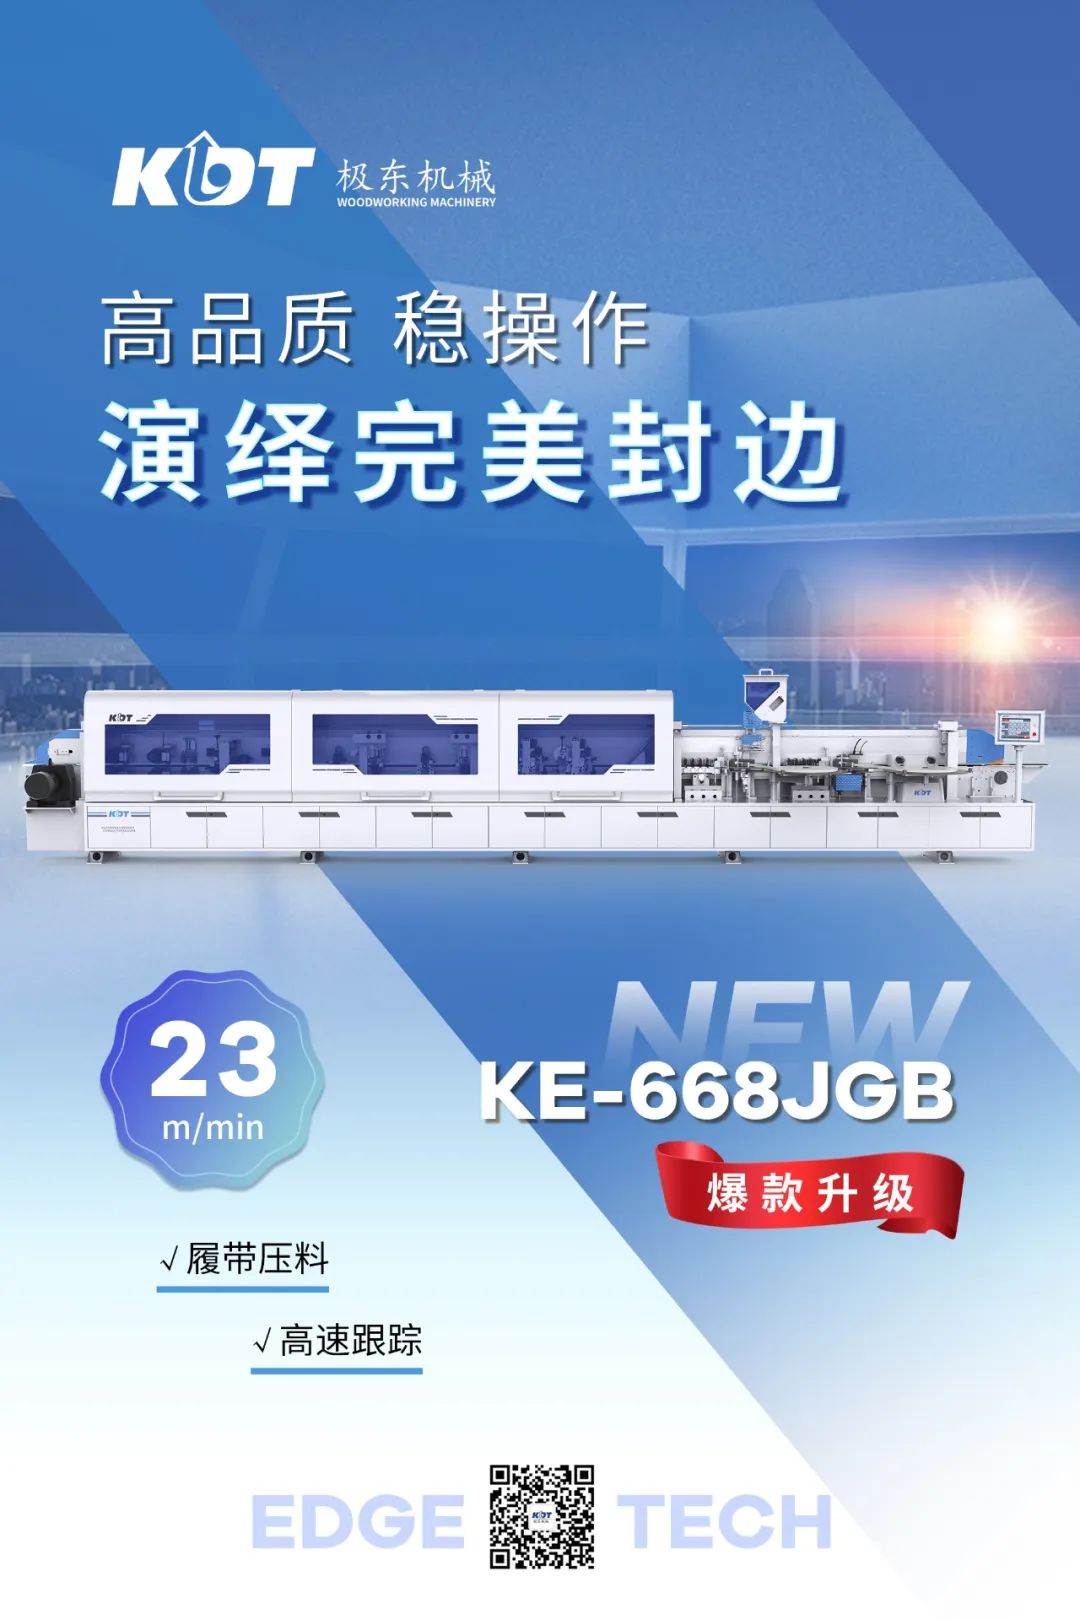 KE-668JGB | Explosive model upgraded with perfect edge banding!